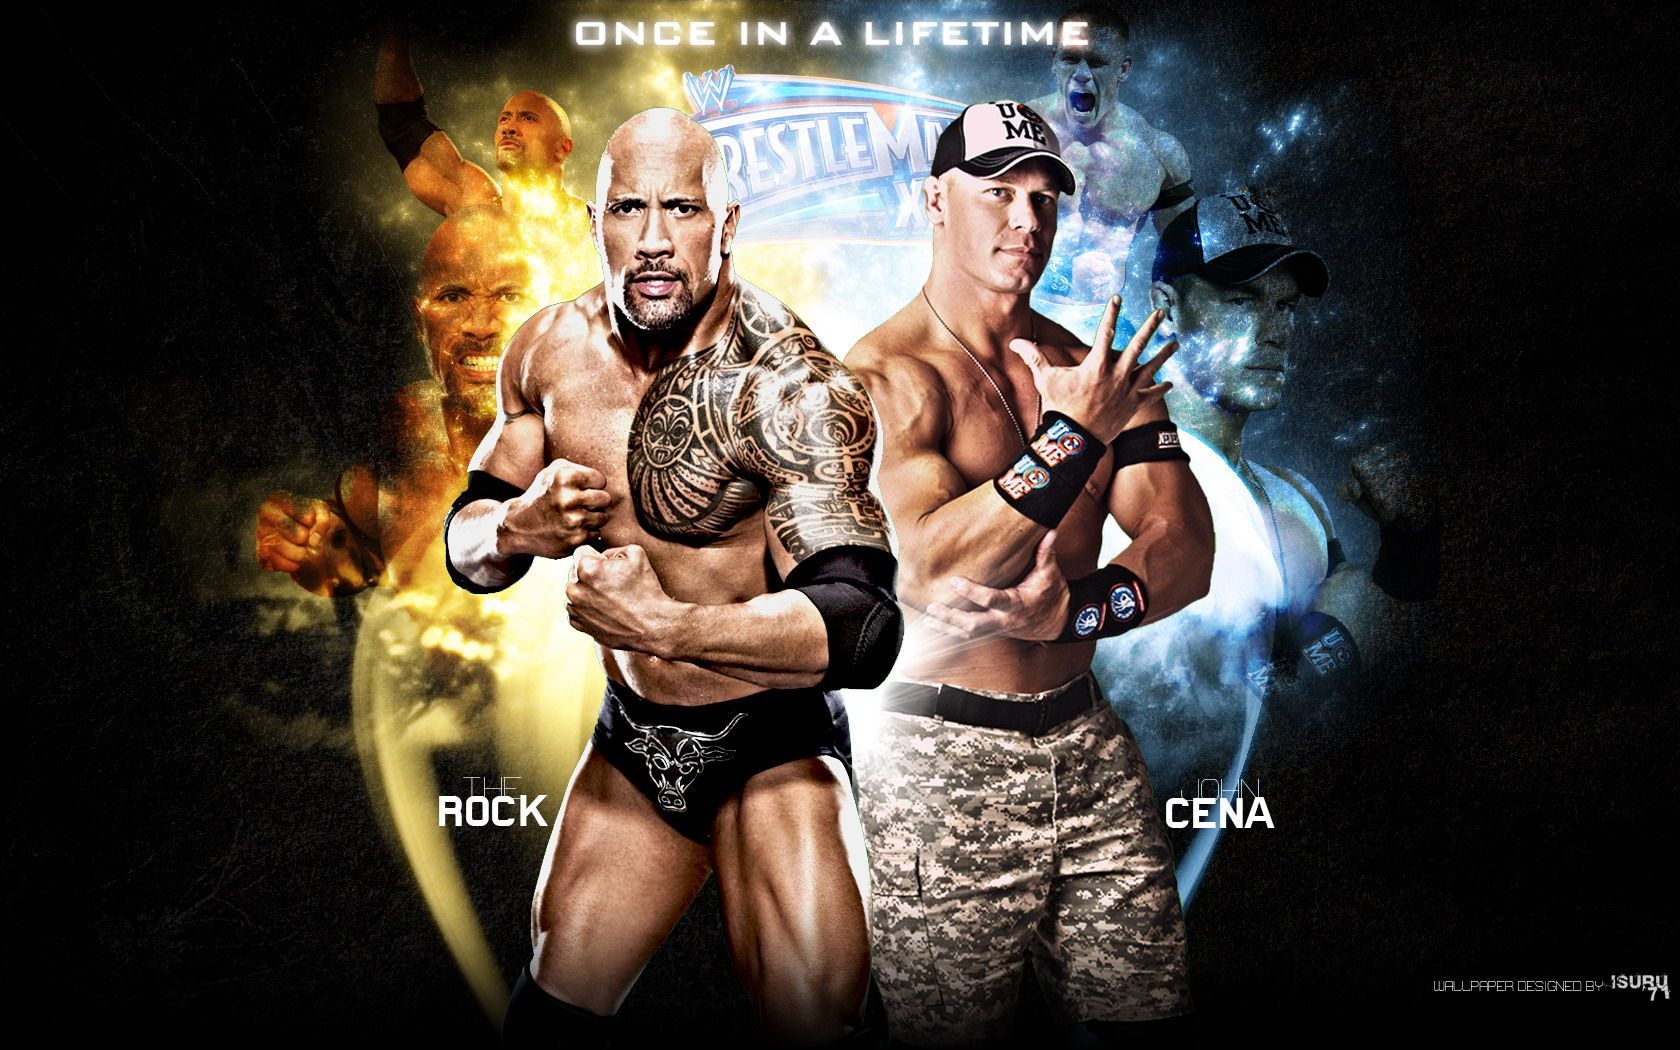 Wallpaper John Cena Wwe The Rock Vs Once In A Lifetime 1680x1050 #john cena. Wwe the rock, John cena, Once in a lifetime